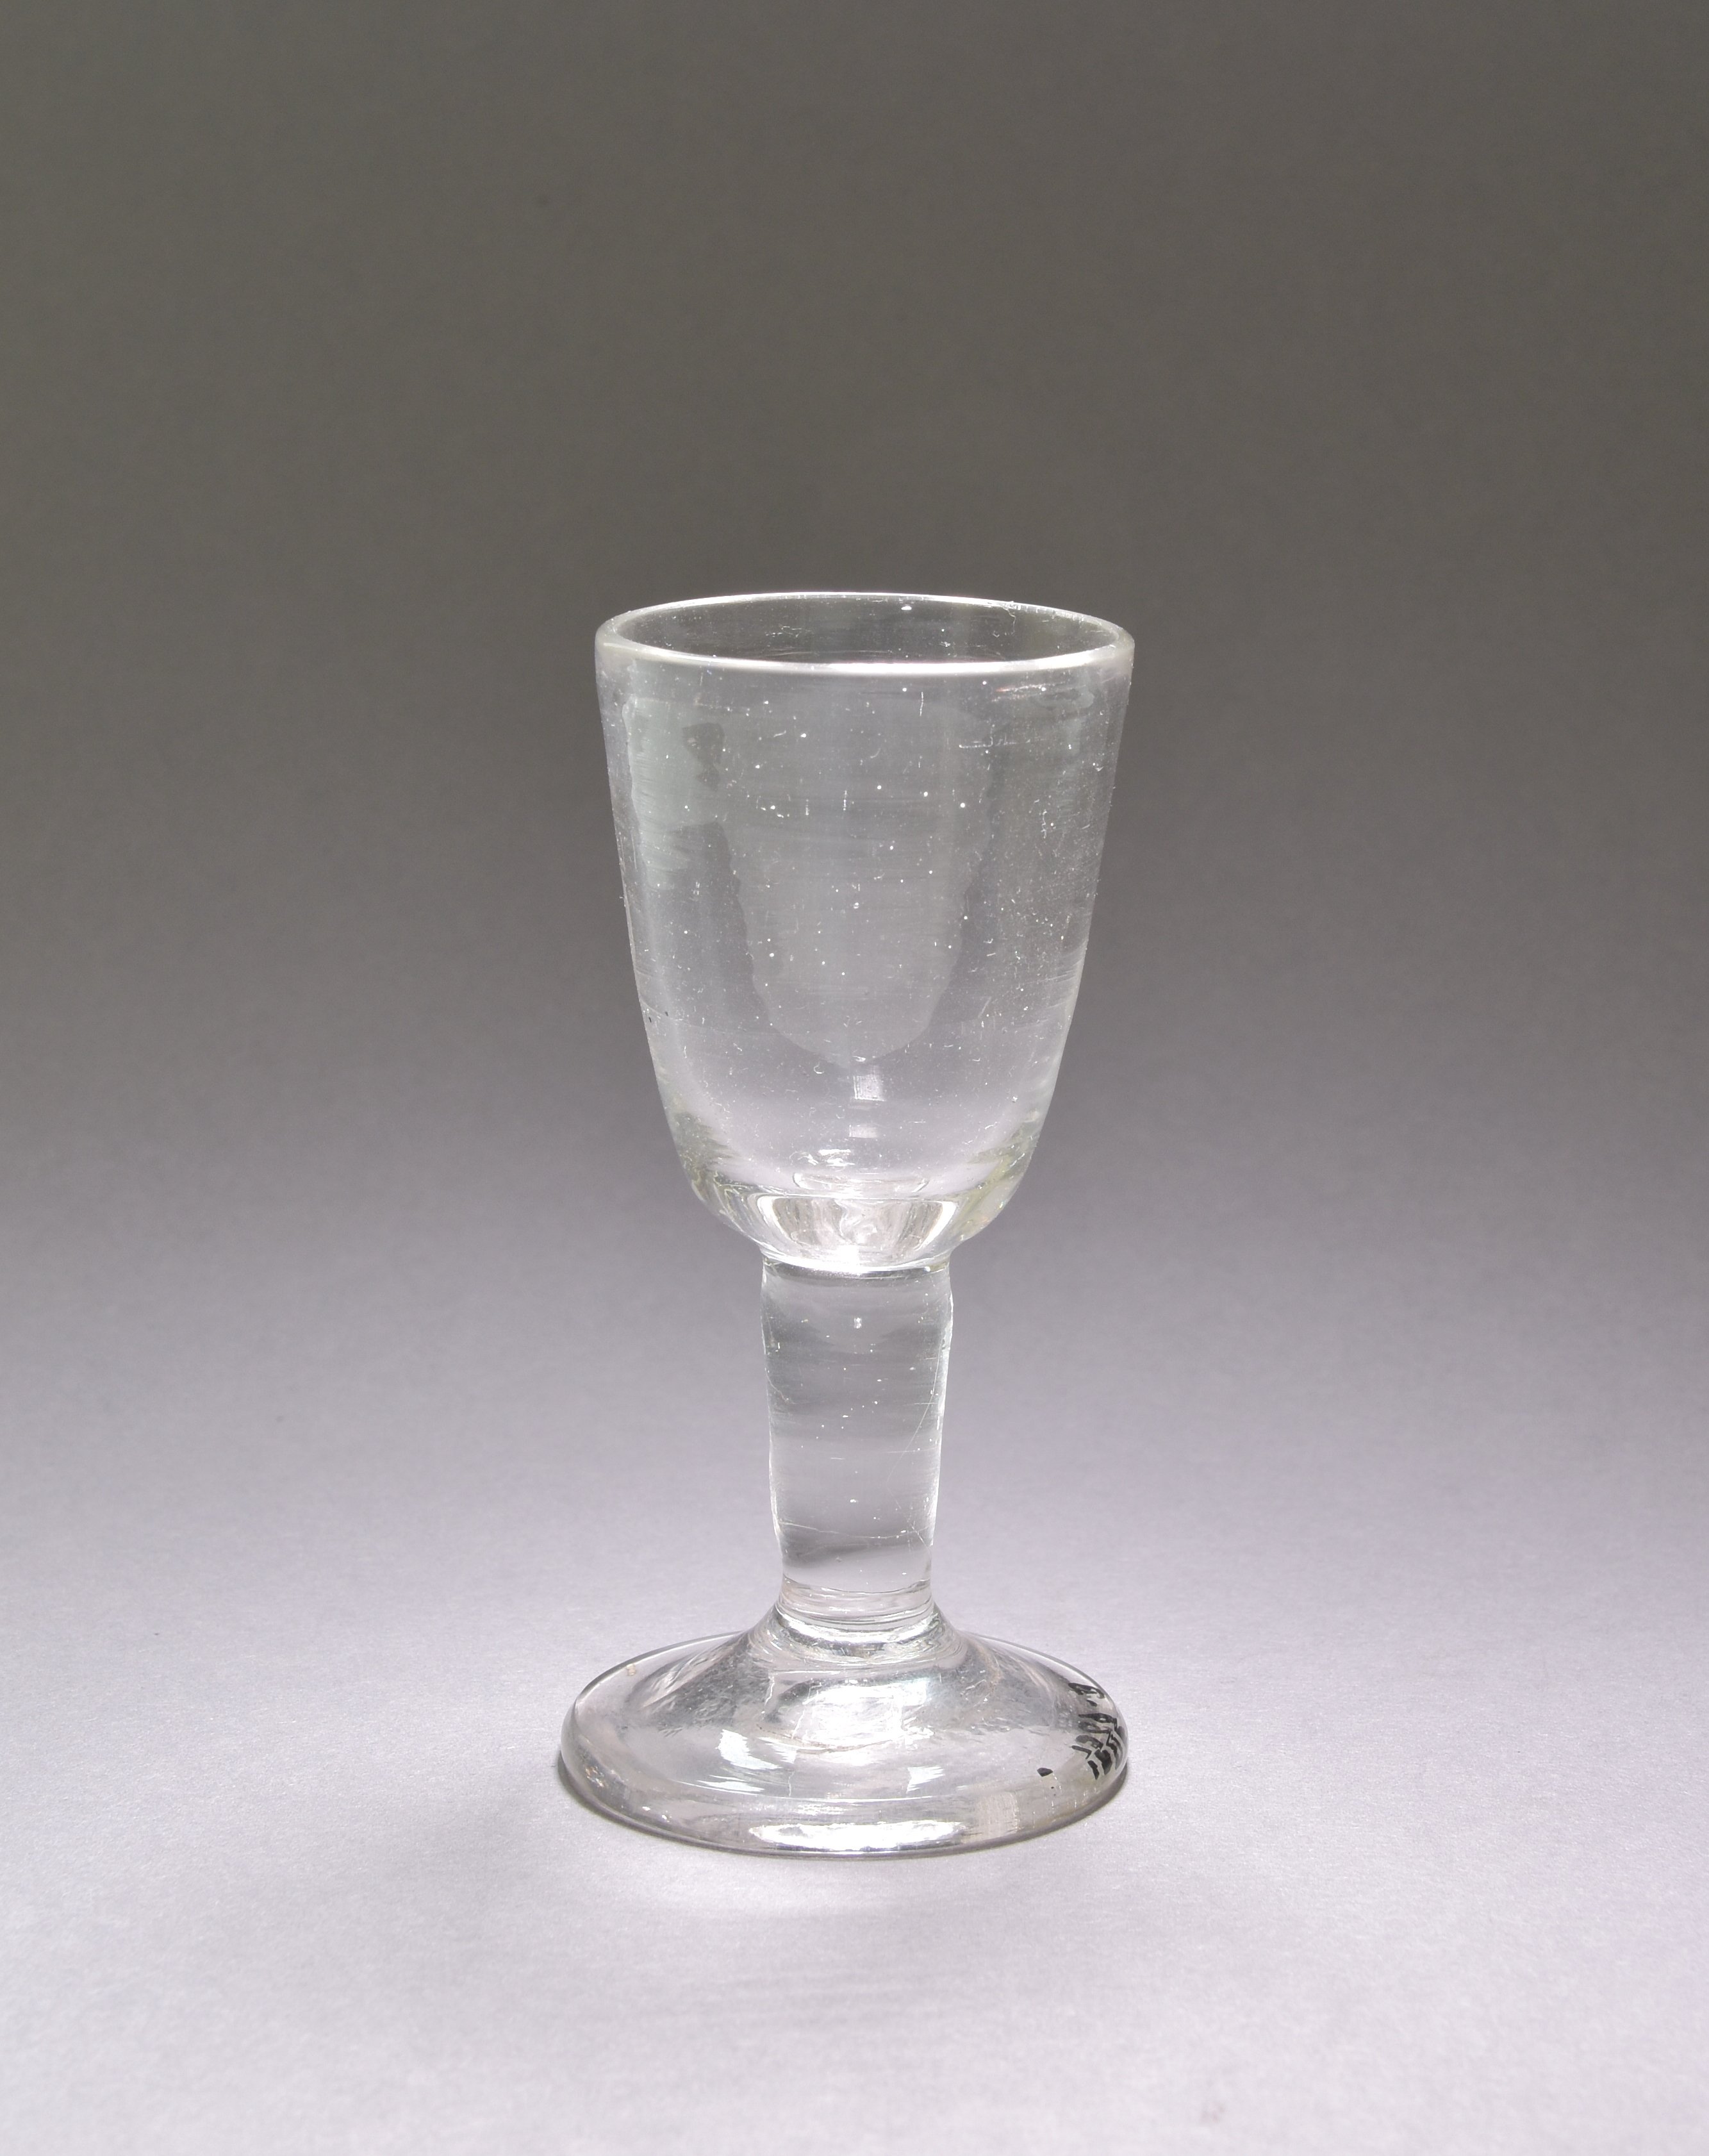 Einfaches Kelchglas ohne Dekor (Museum Neuruppin CC BY-NC-SA)